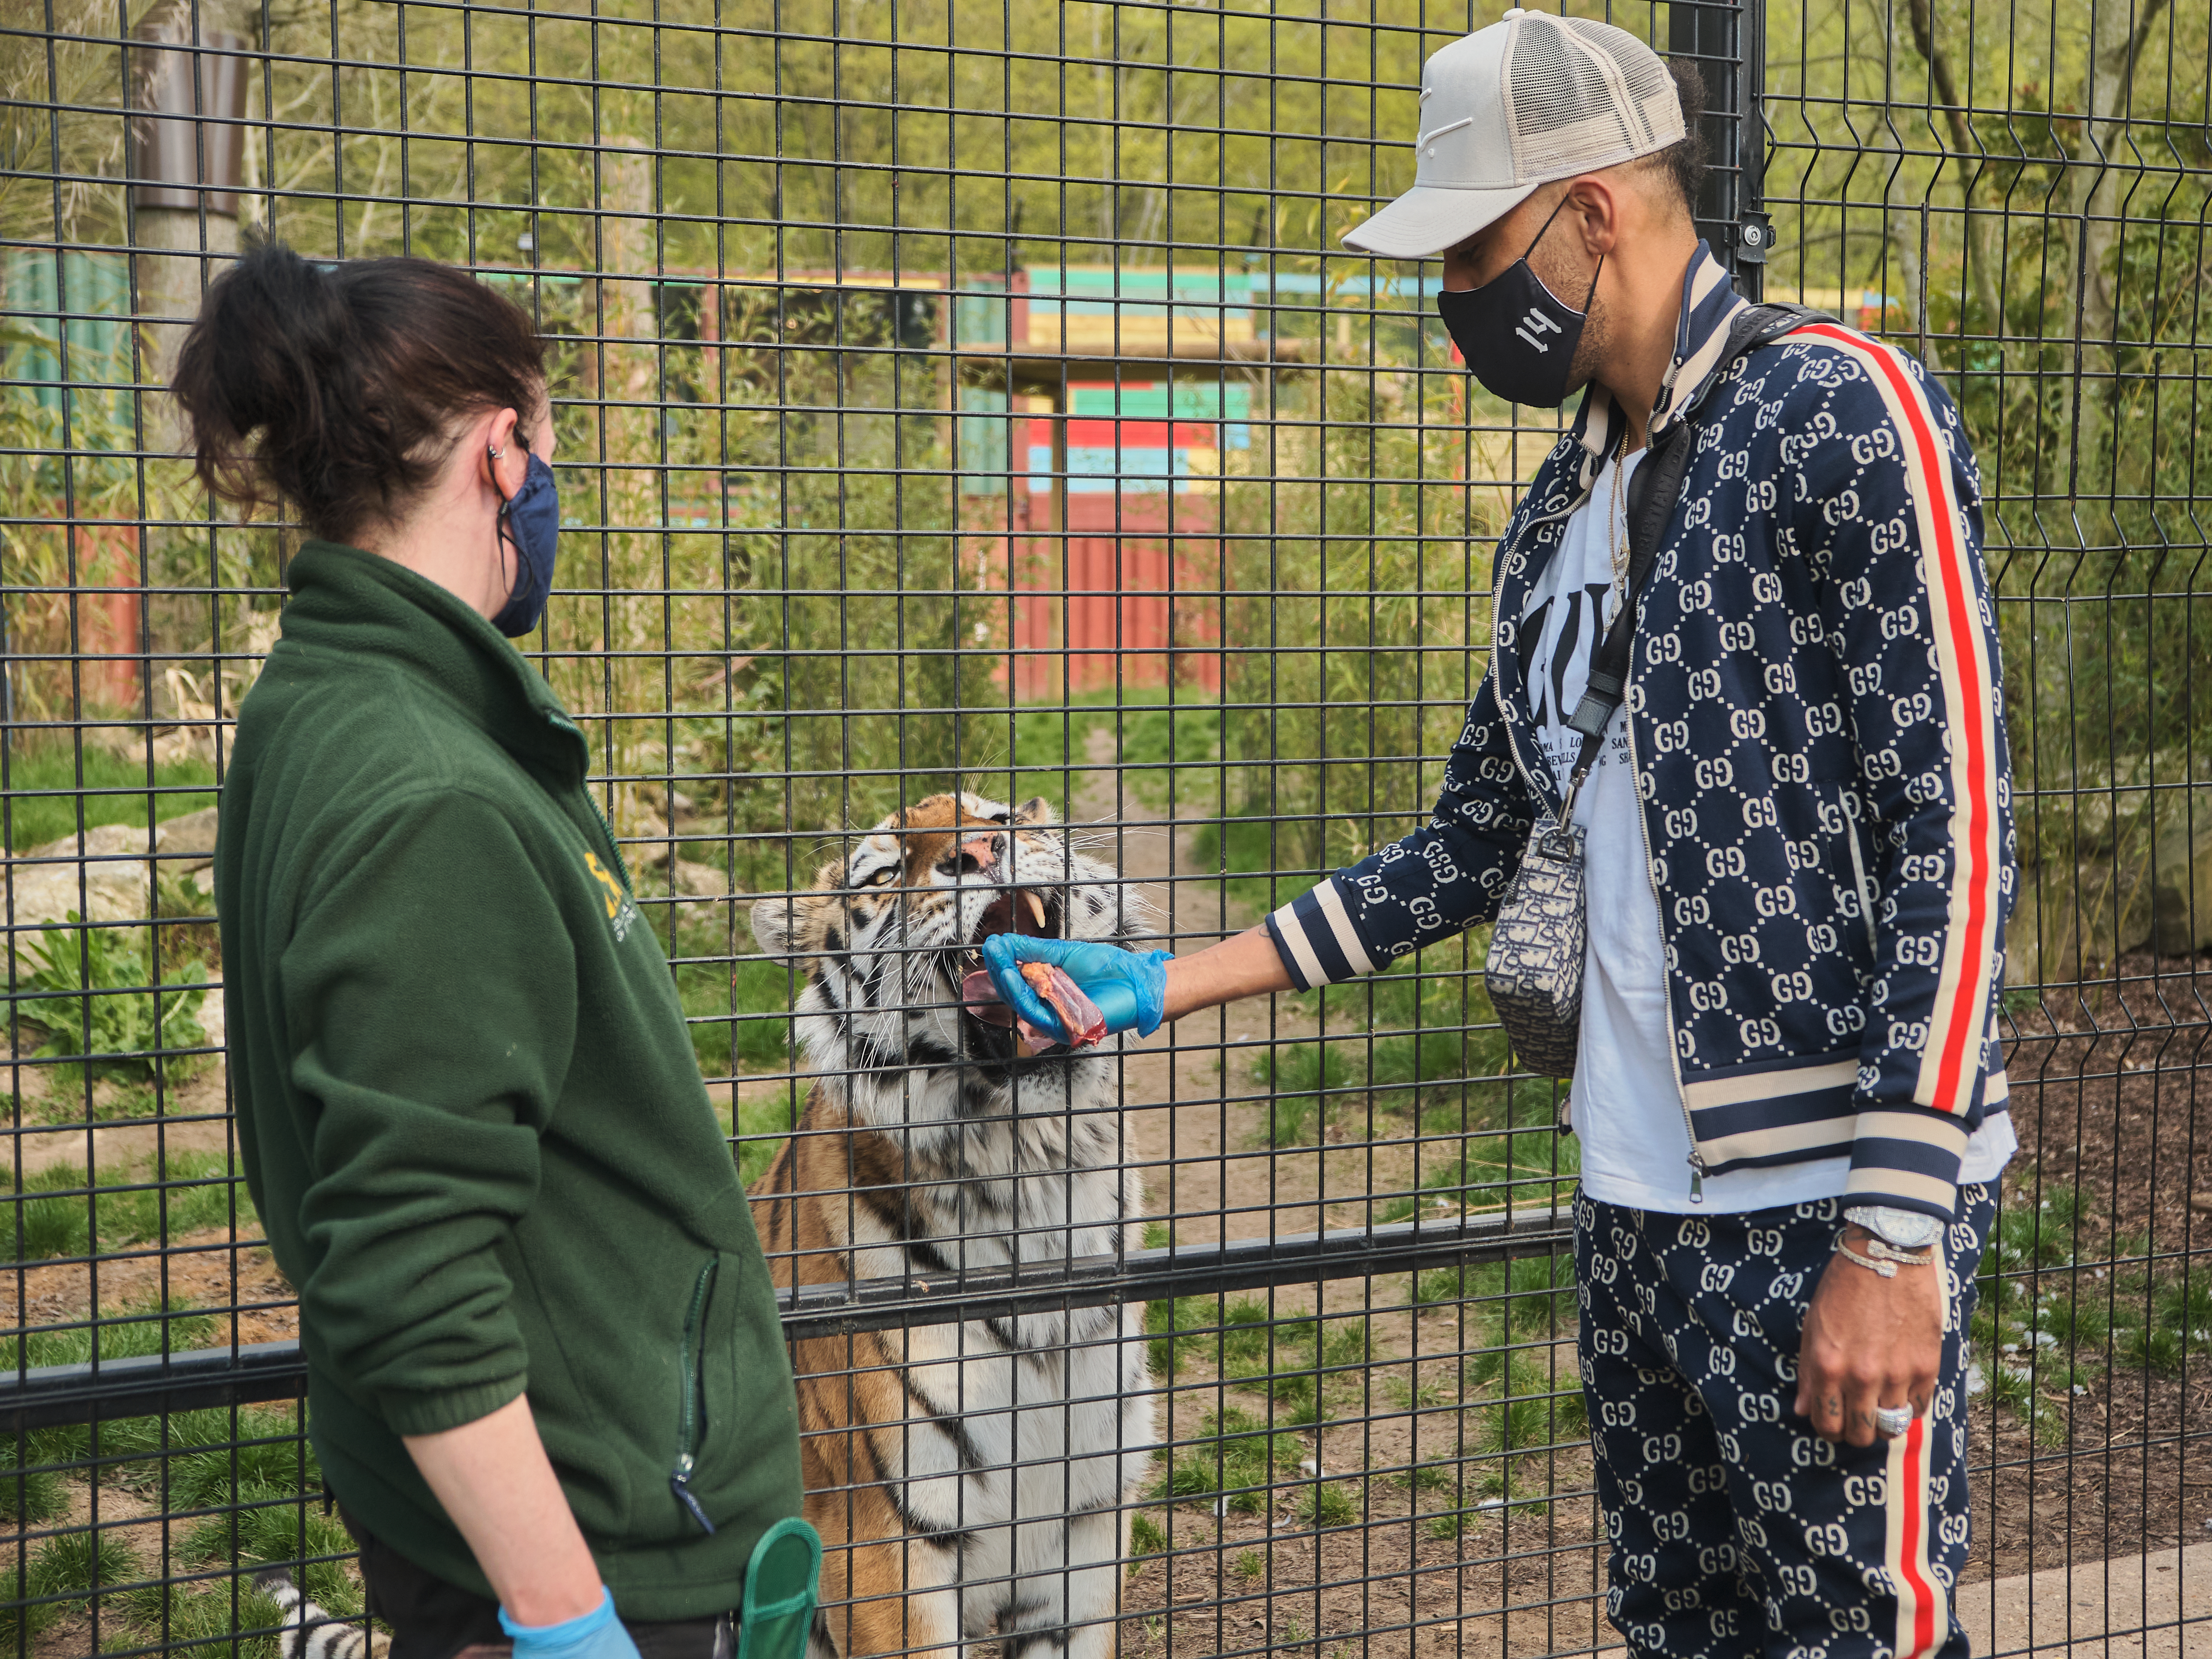 Pierre-Emerick Aubameyang feeds a tiger